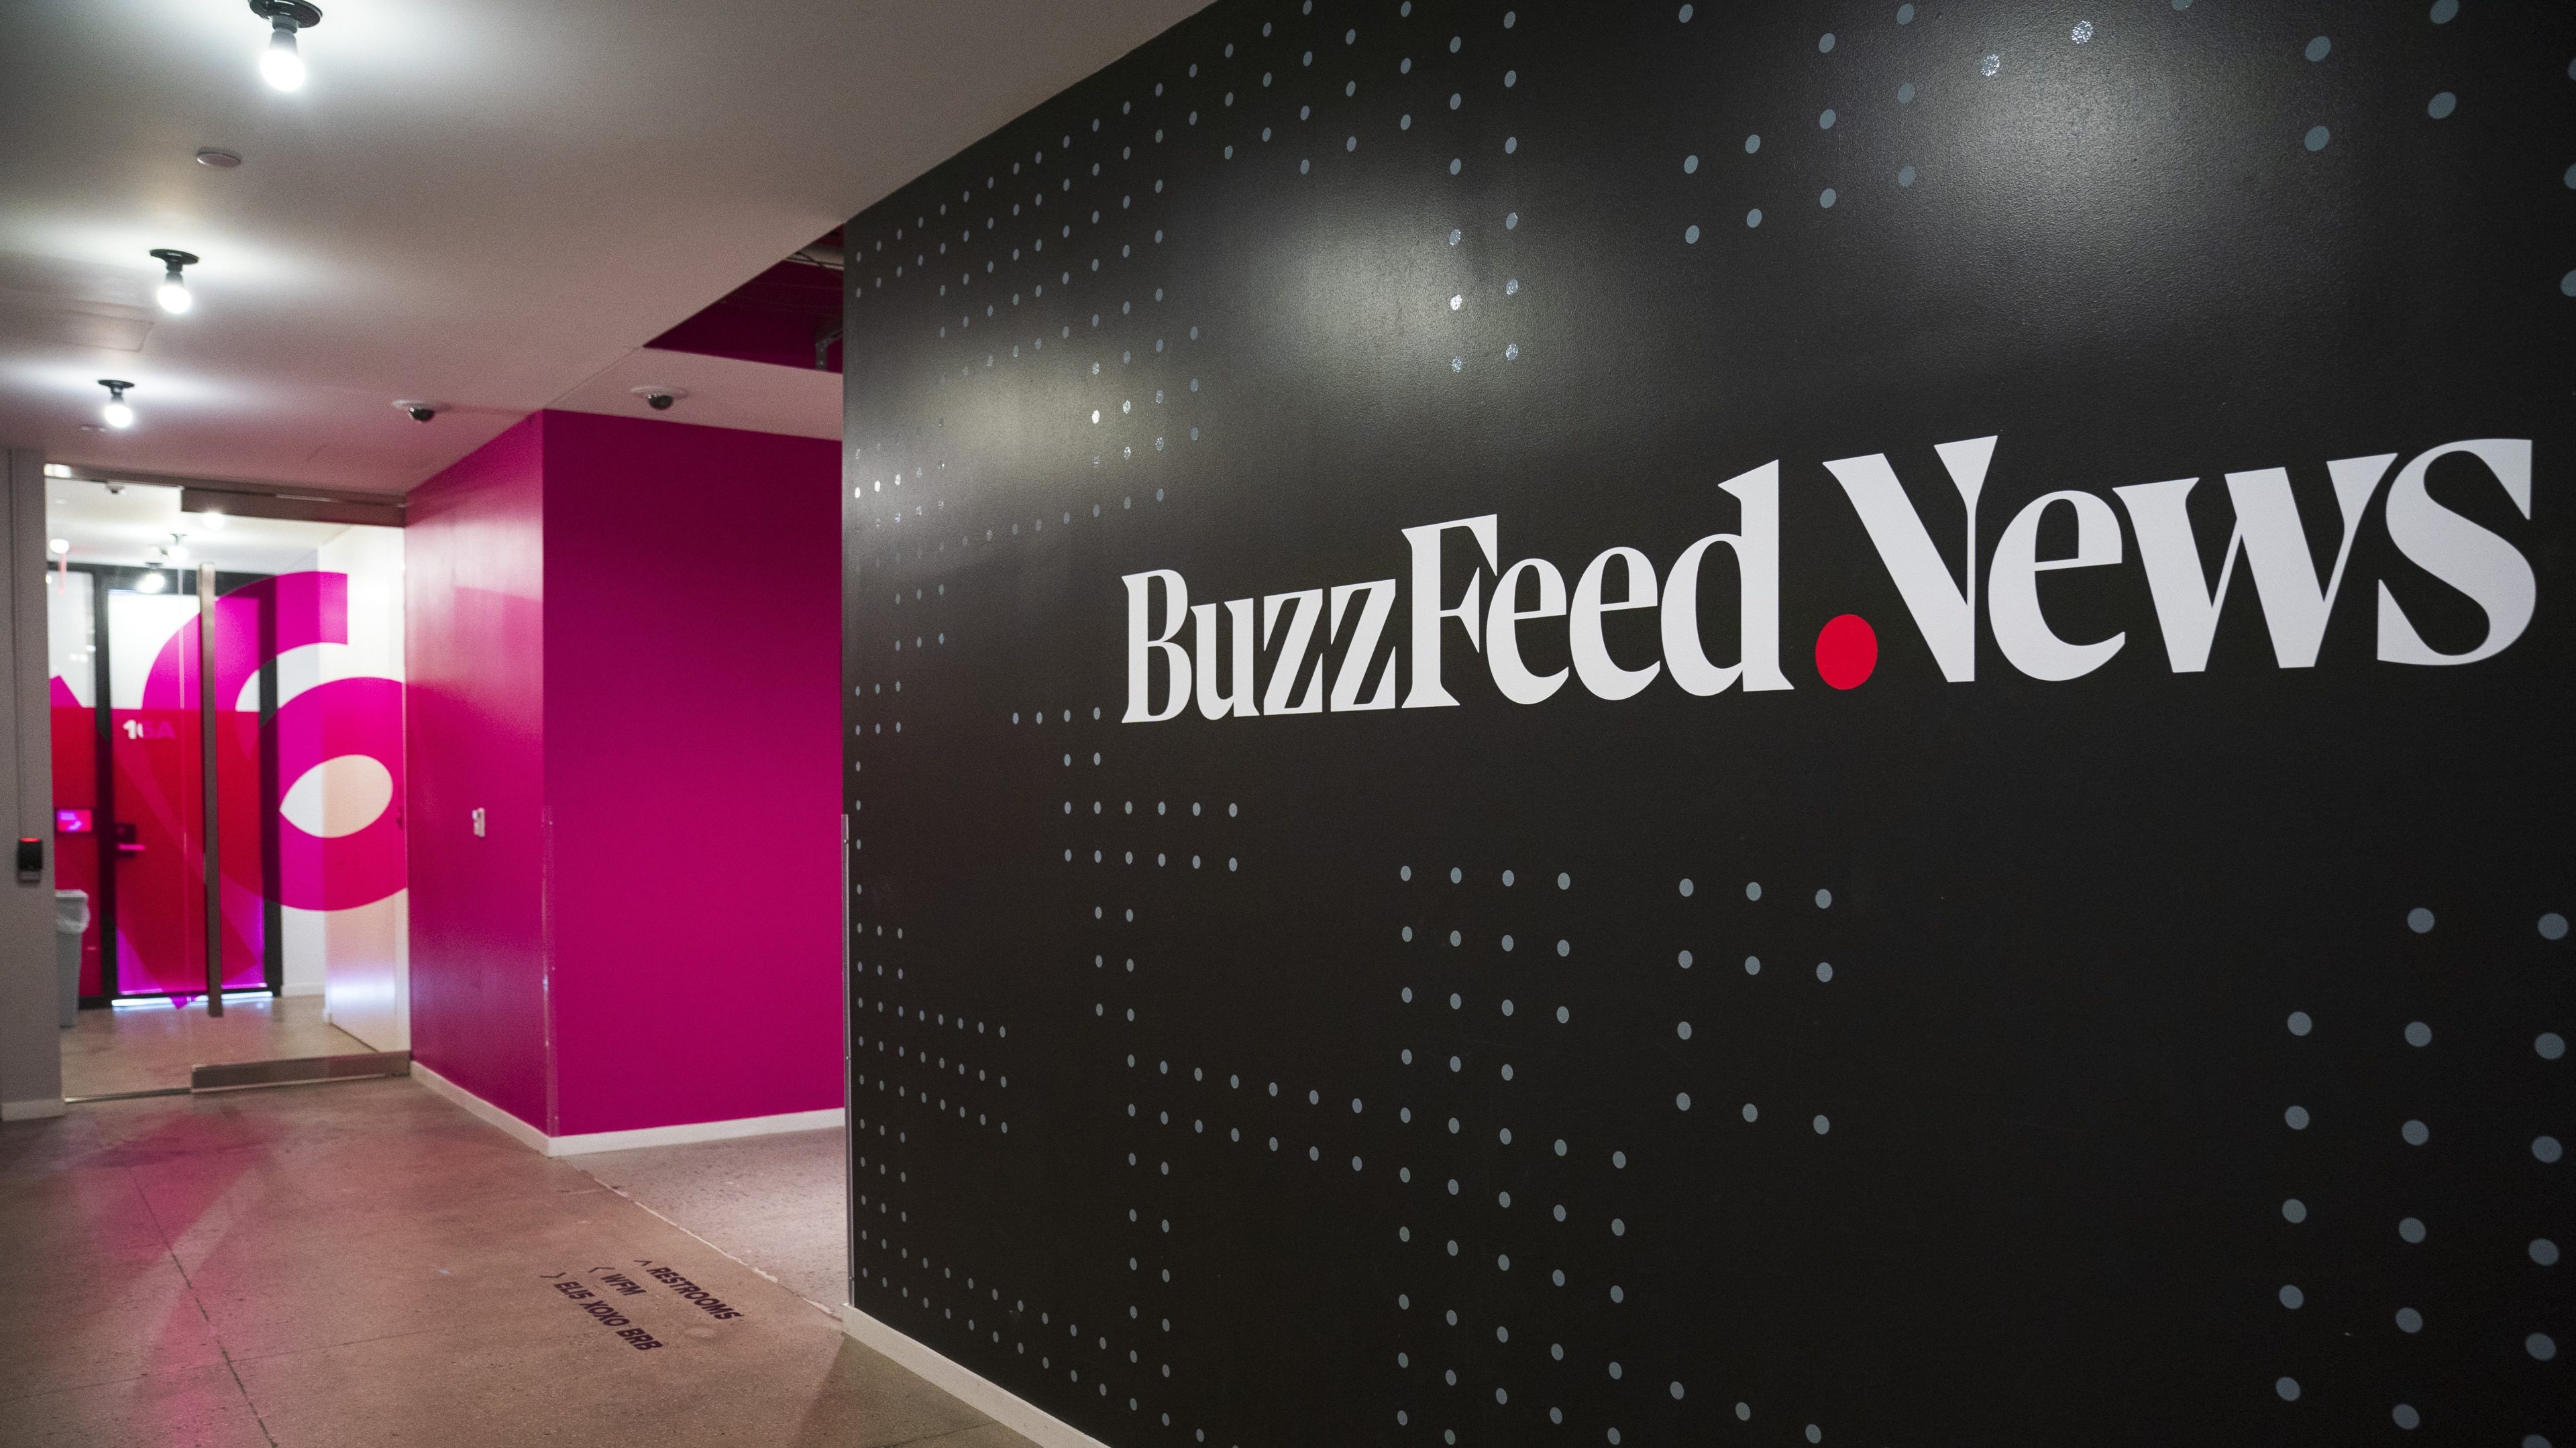 A BuzzFeed News logo adorns a wall inside BuzzFeed headquarters, December 11, 2018 in New York City.